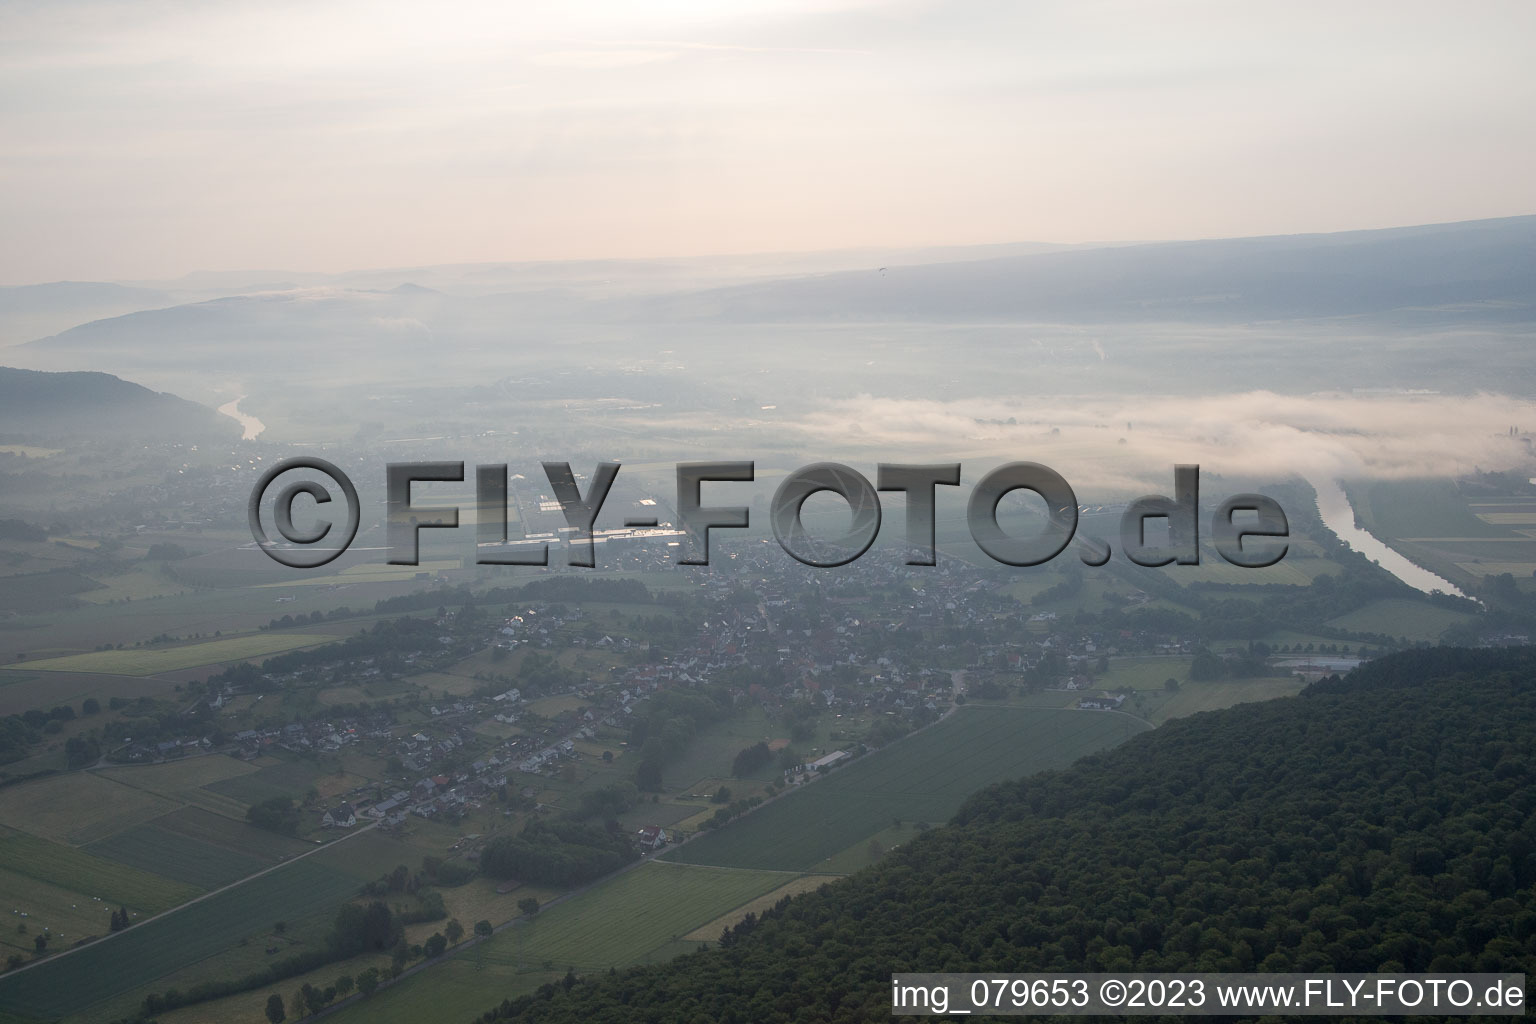 Aerial view of Thonenburg in the state North Rhine-Westphalia, Germany